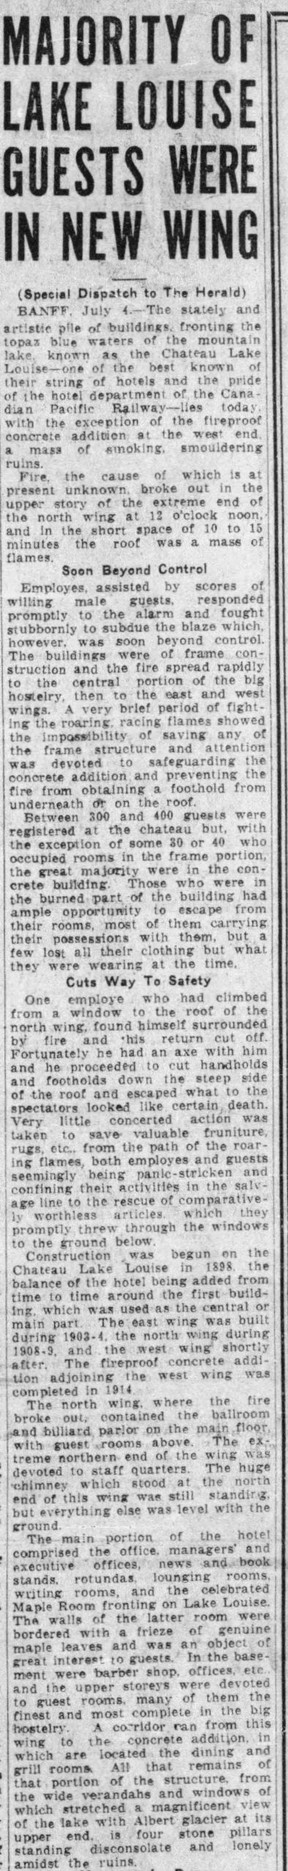 Calgary Herald, July 4, 1924